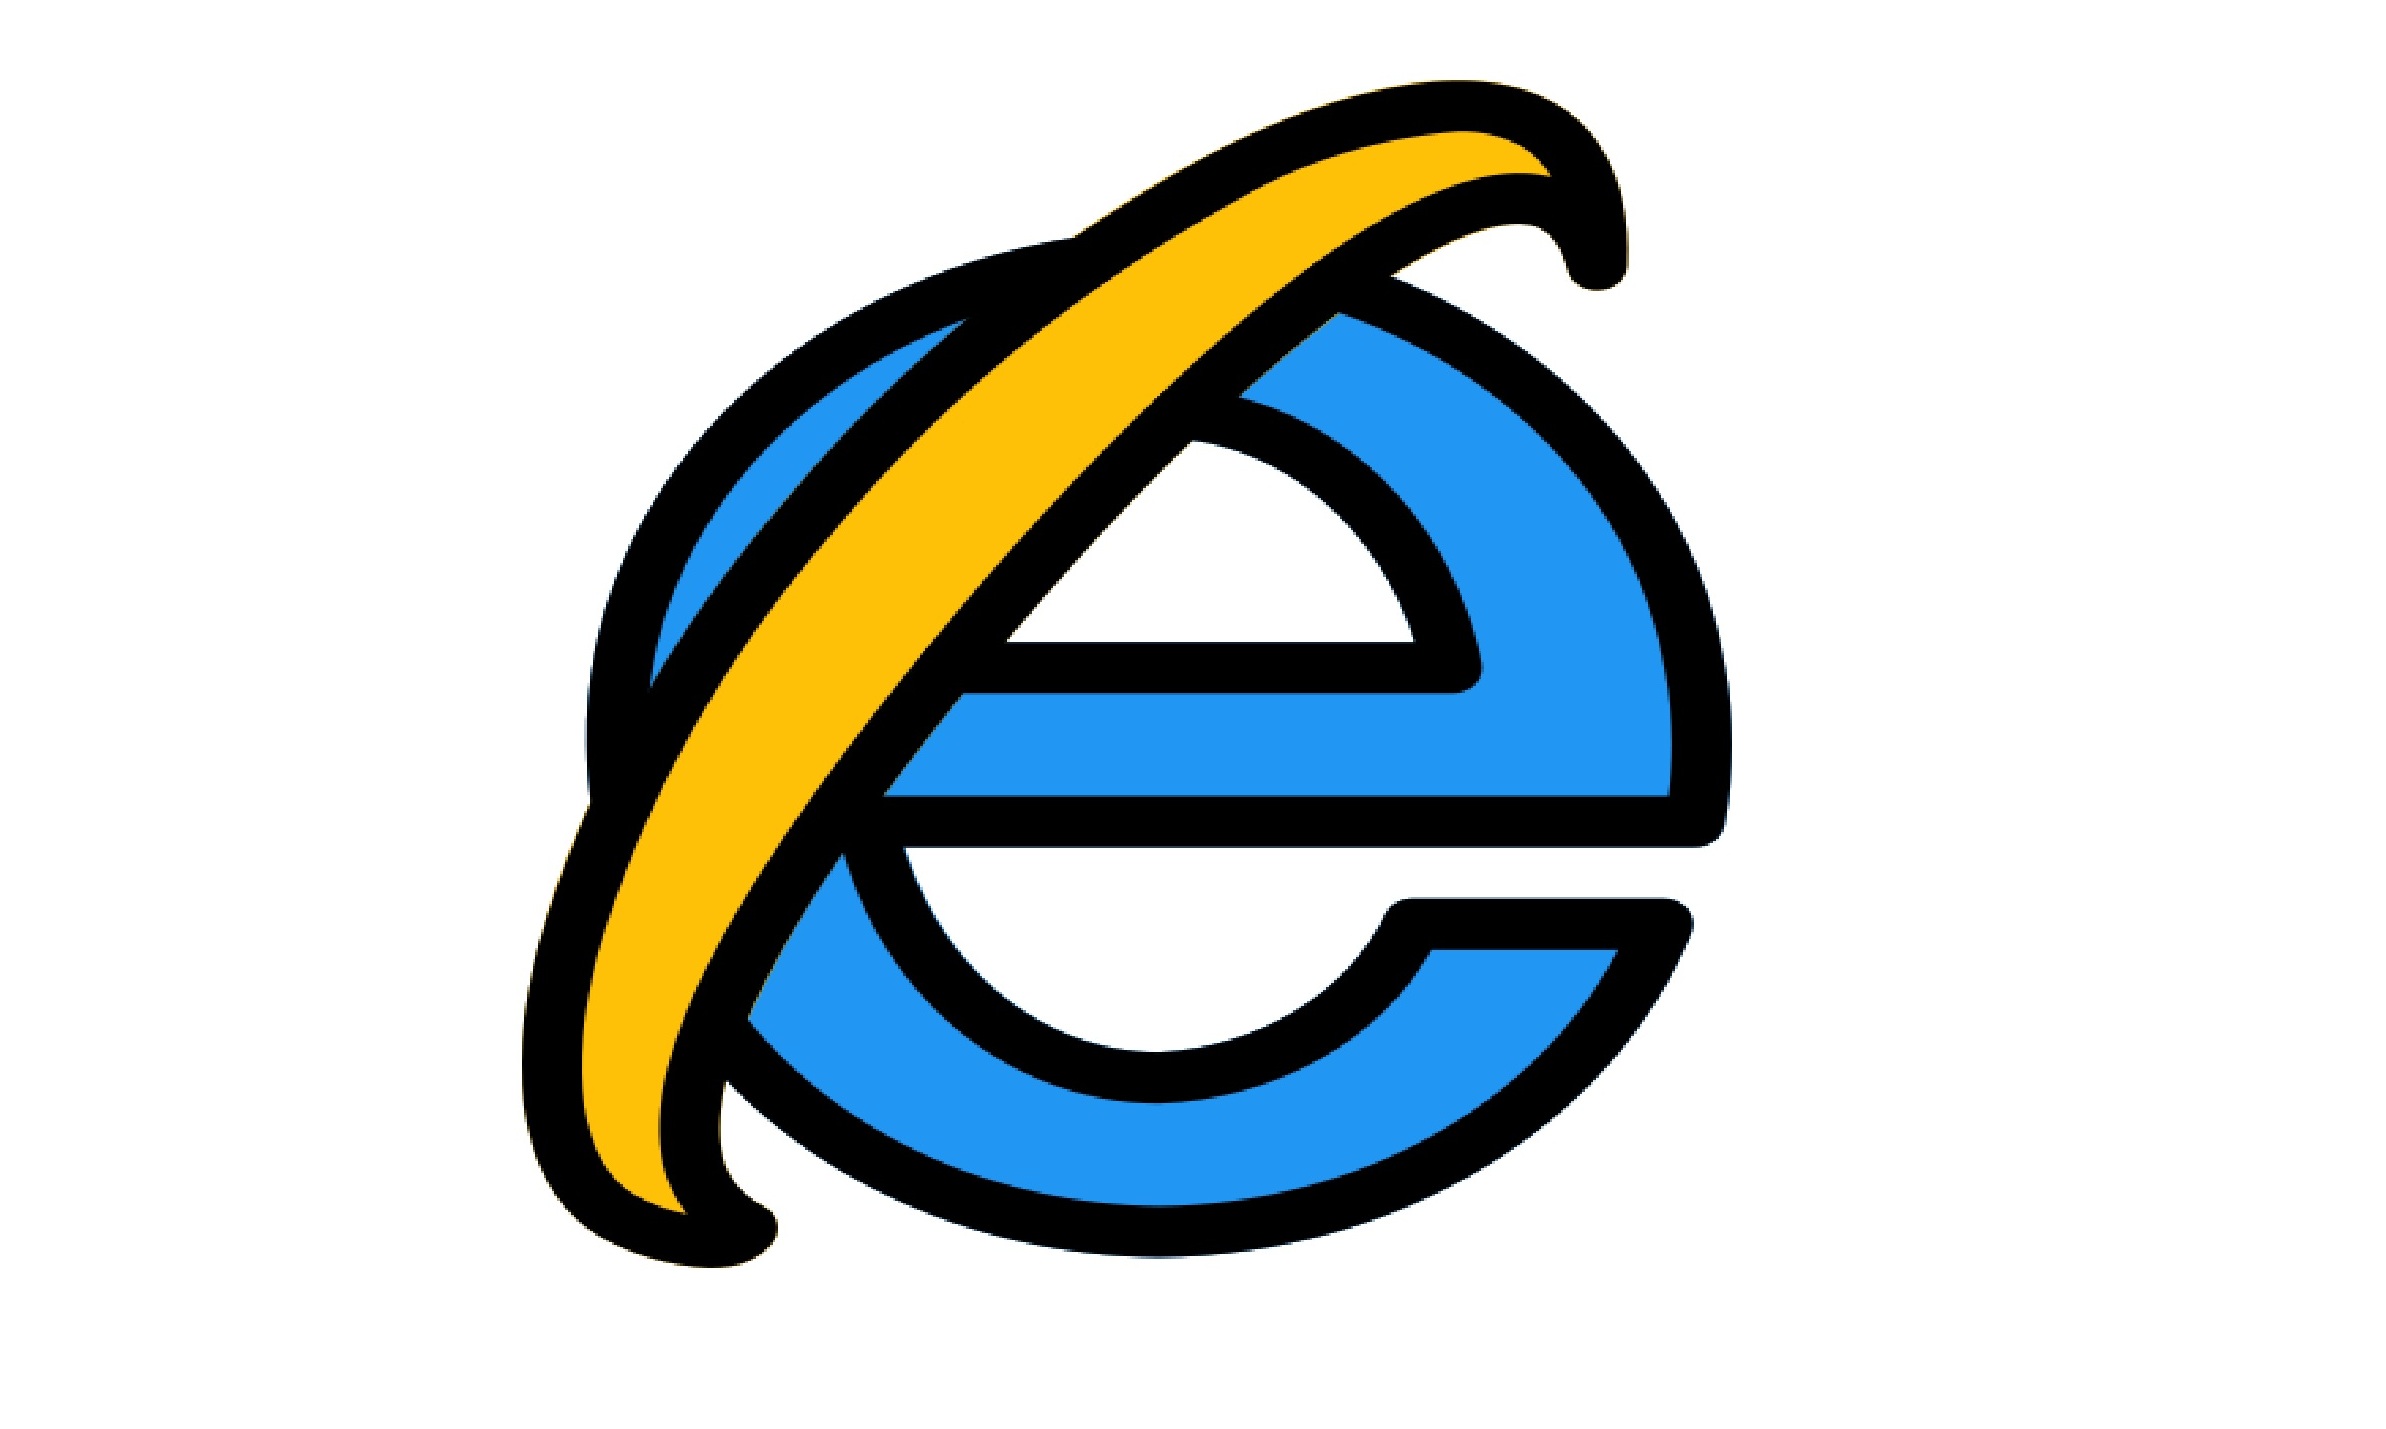 20220615 Internet Explorer logo